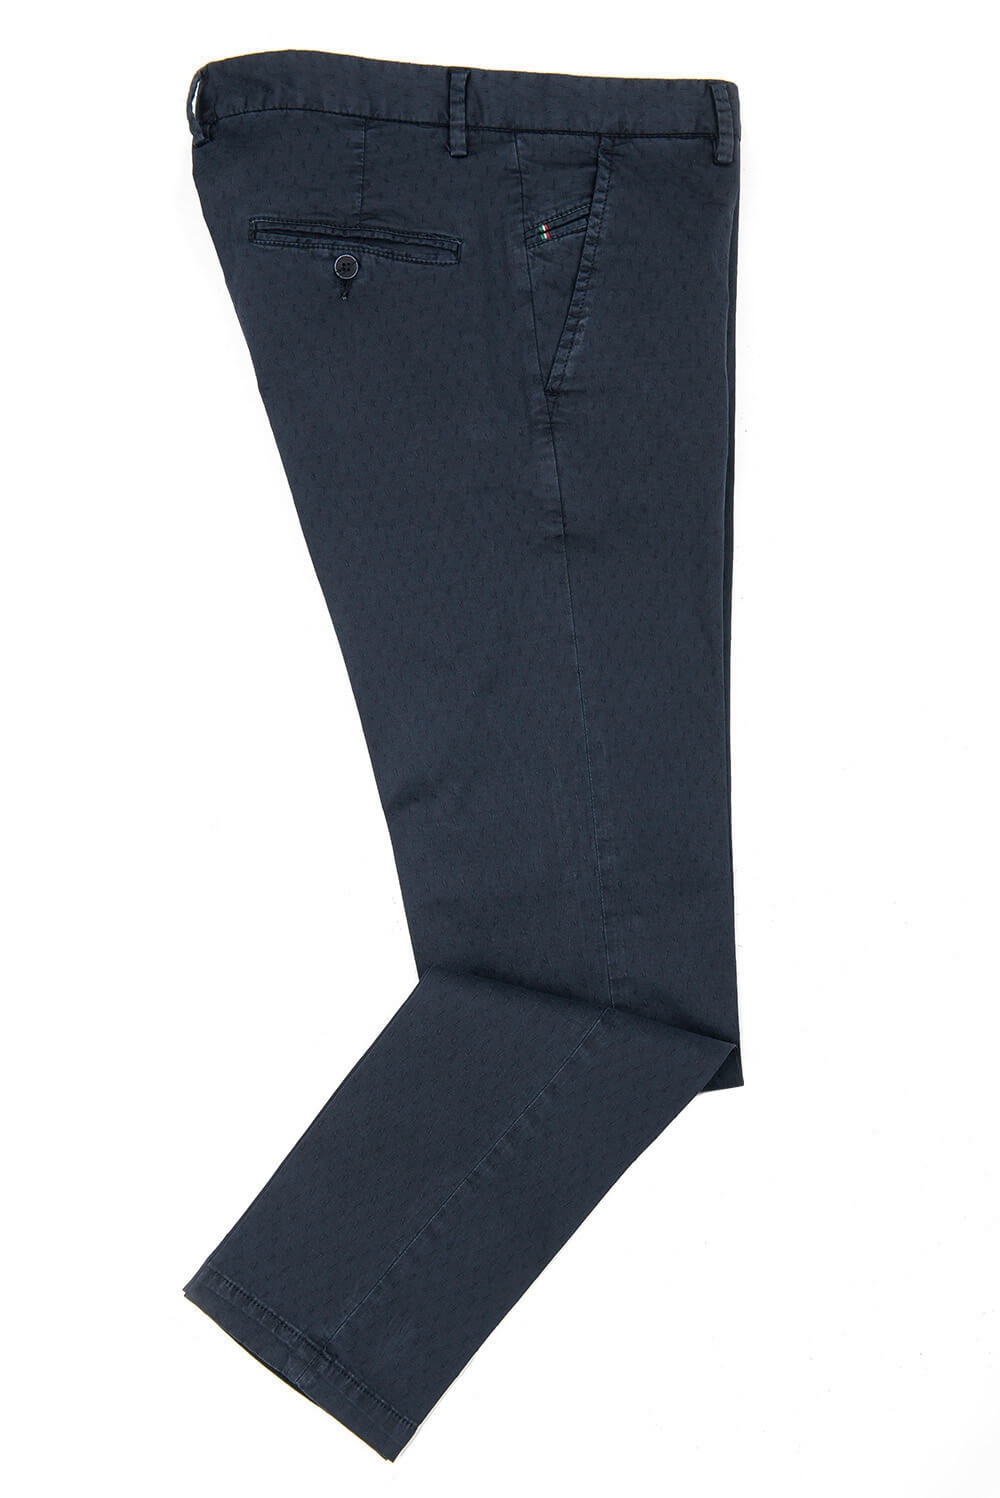 Pantaloni slim bleumarin print geometric 1